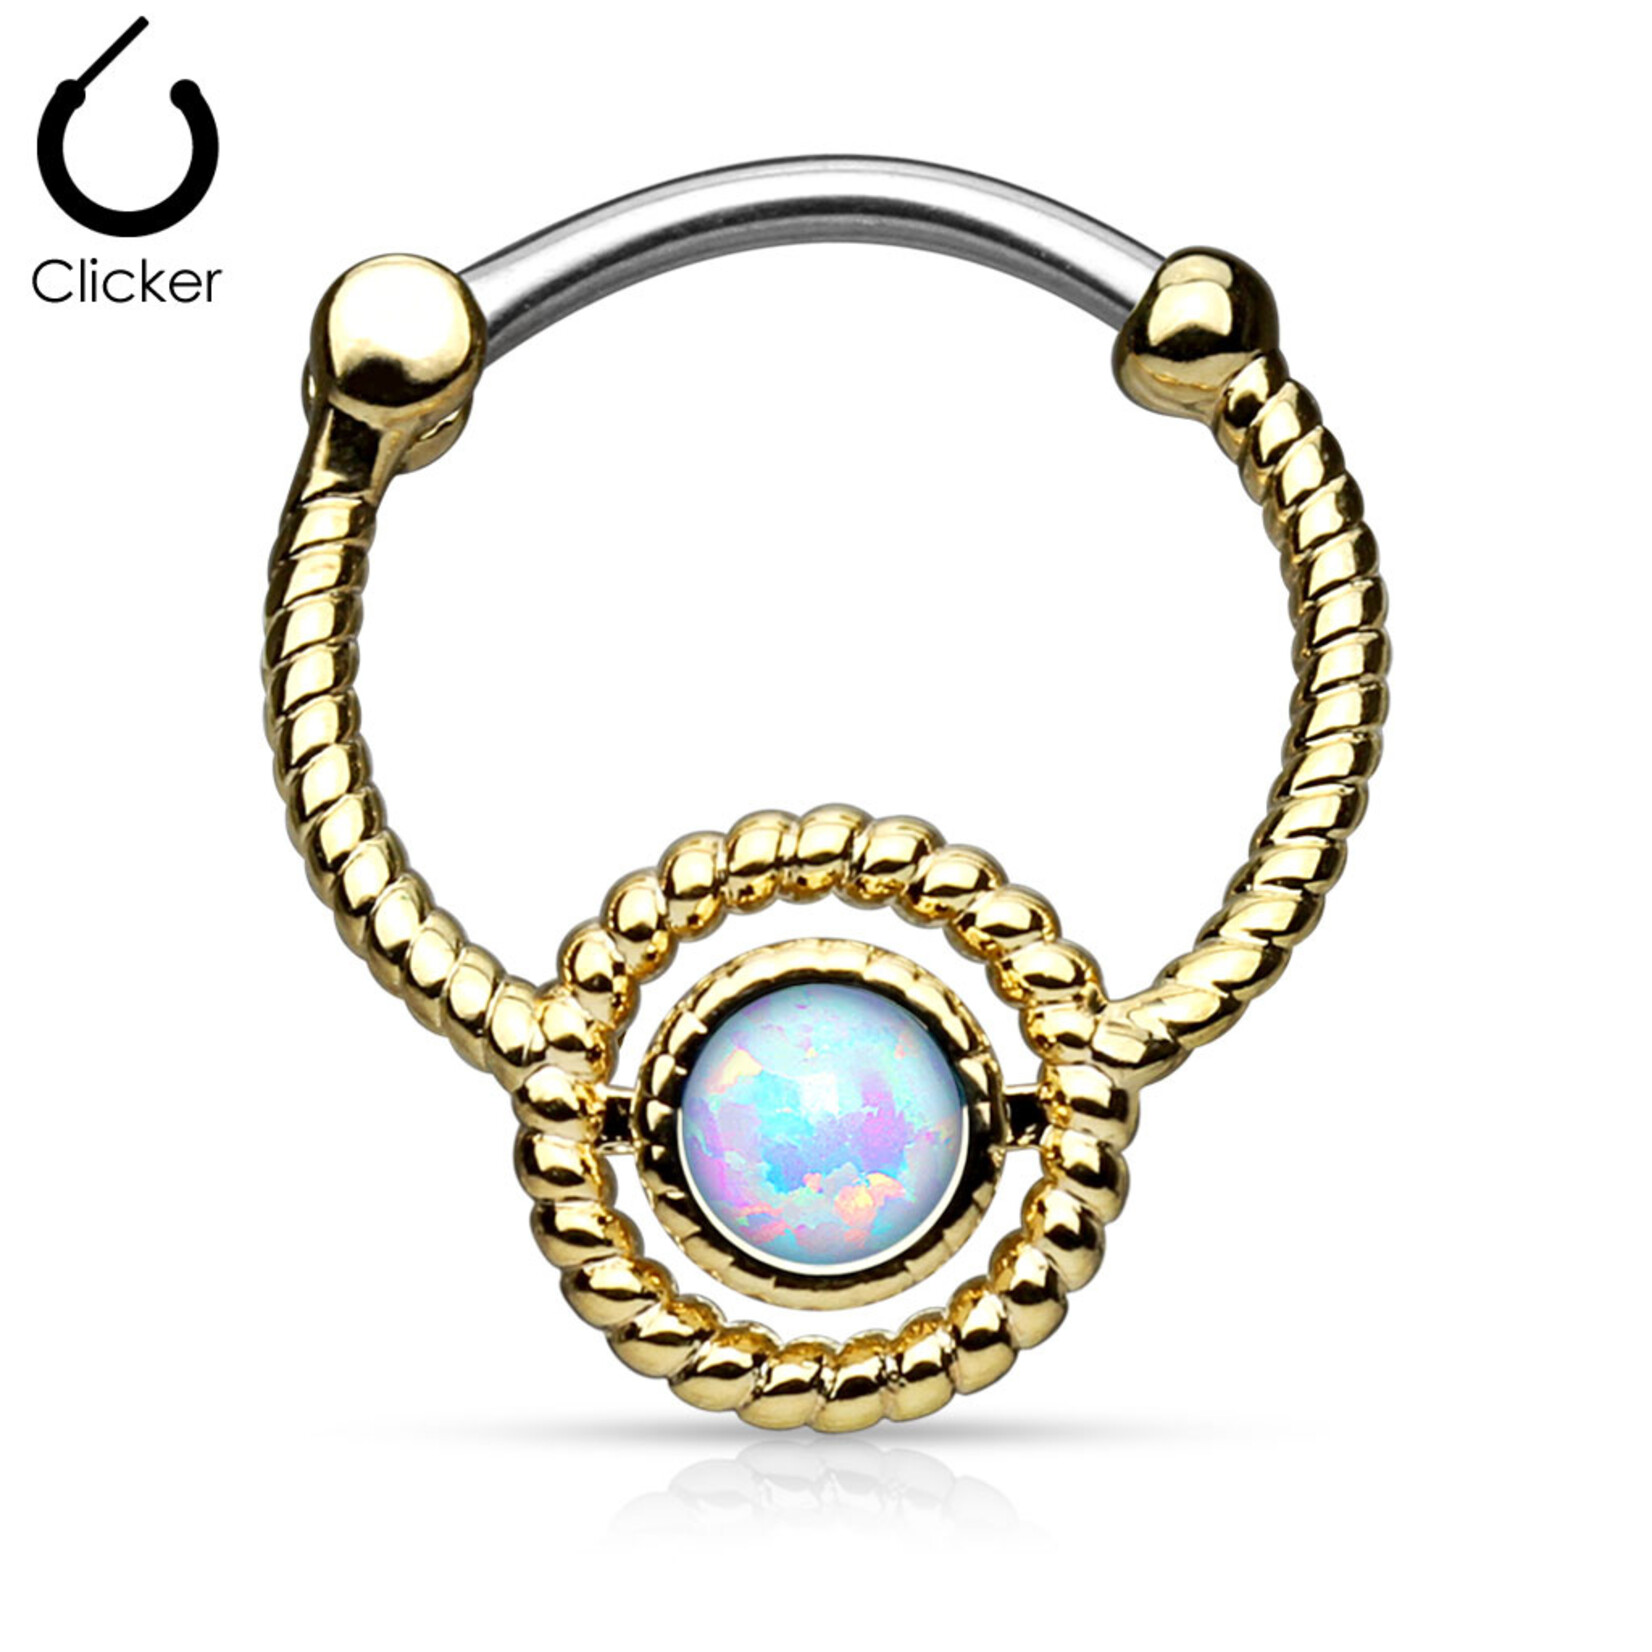 Body Jewelry Roped Opal Clicker